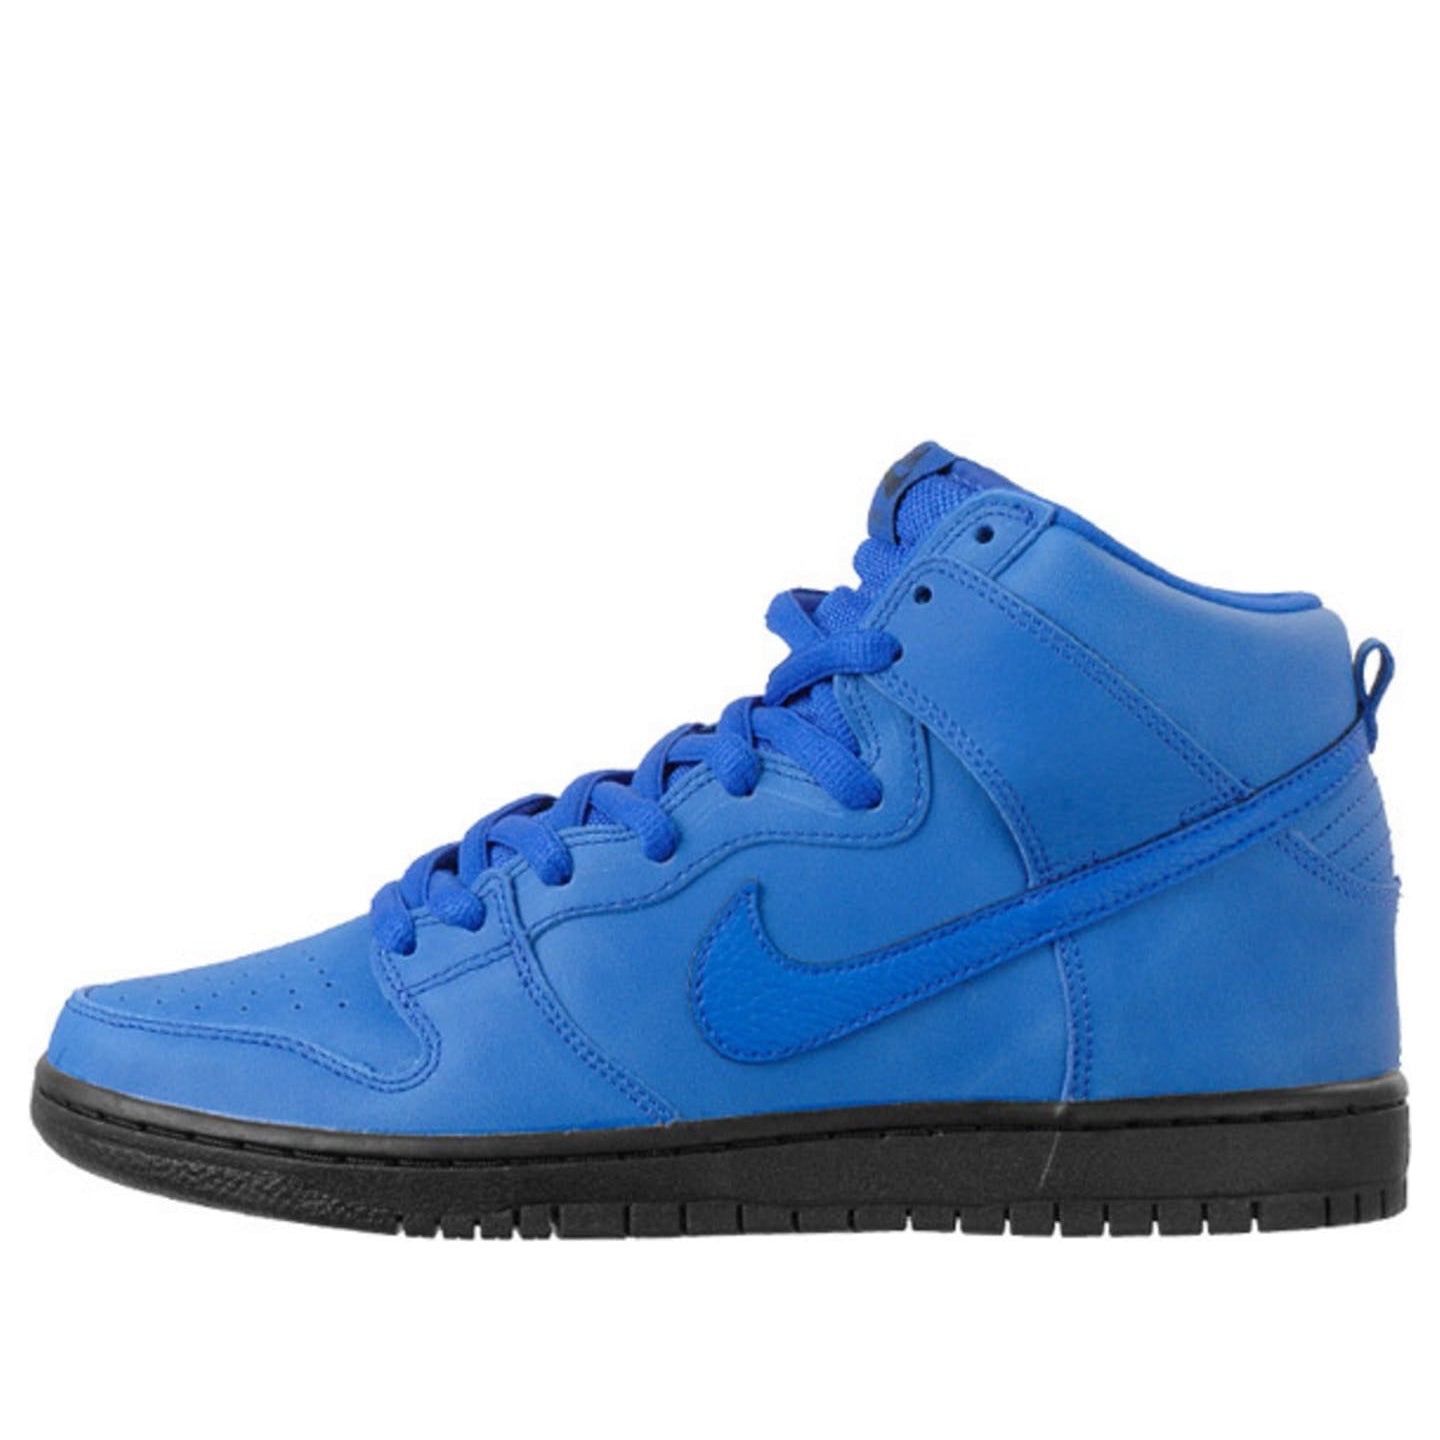 Nike Dunk High Pro Sb 'Blue Eiffel 65'  305050-440 Signature Shoe